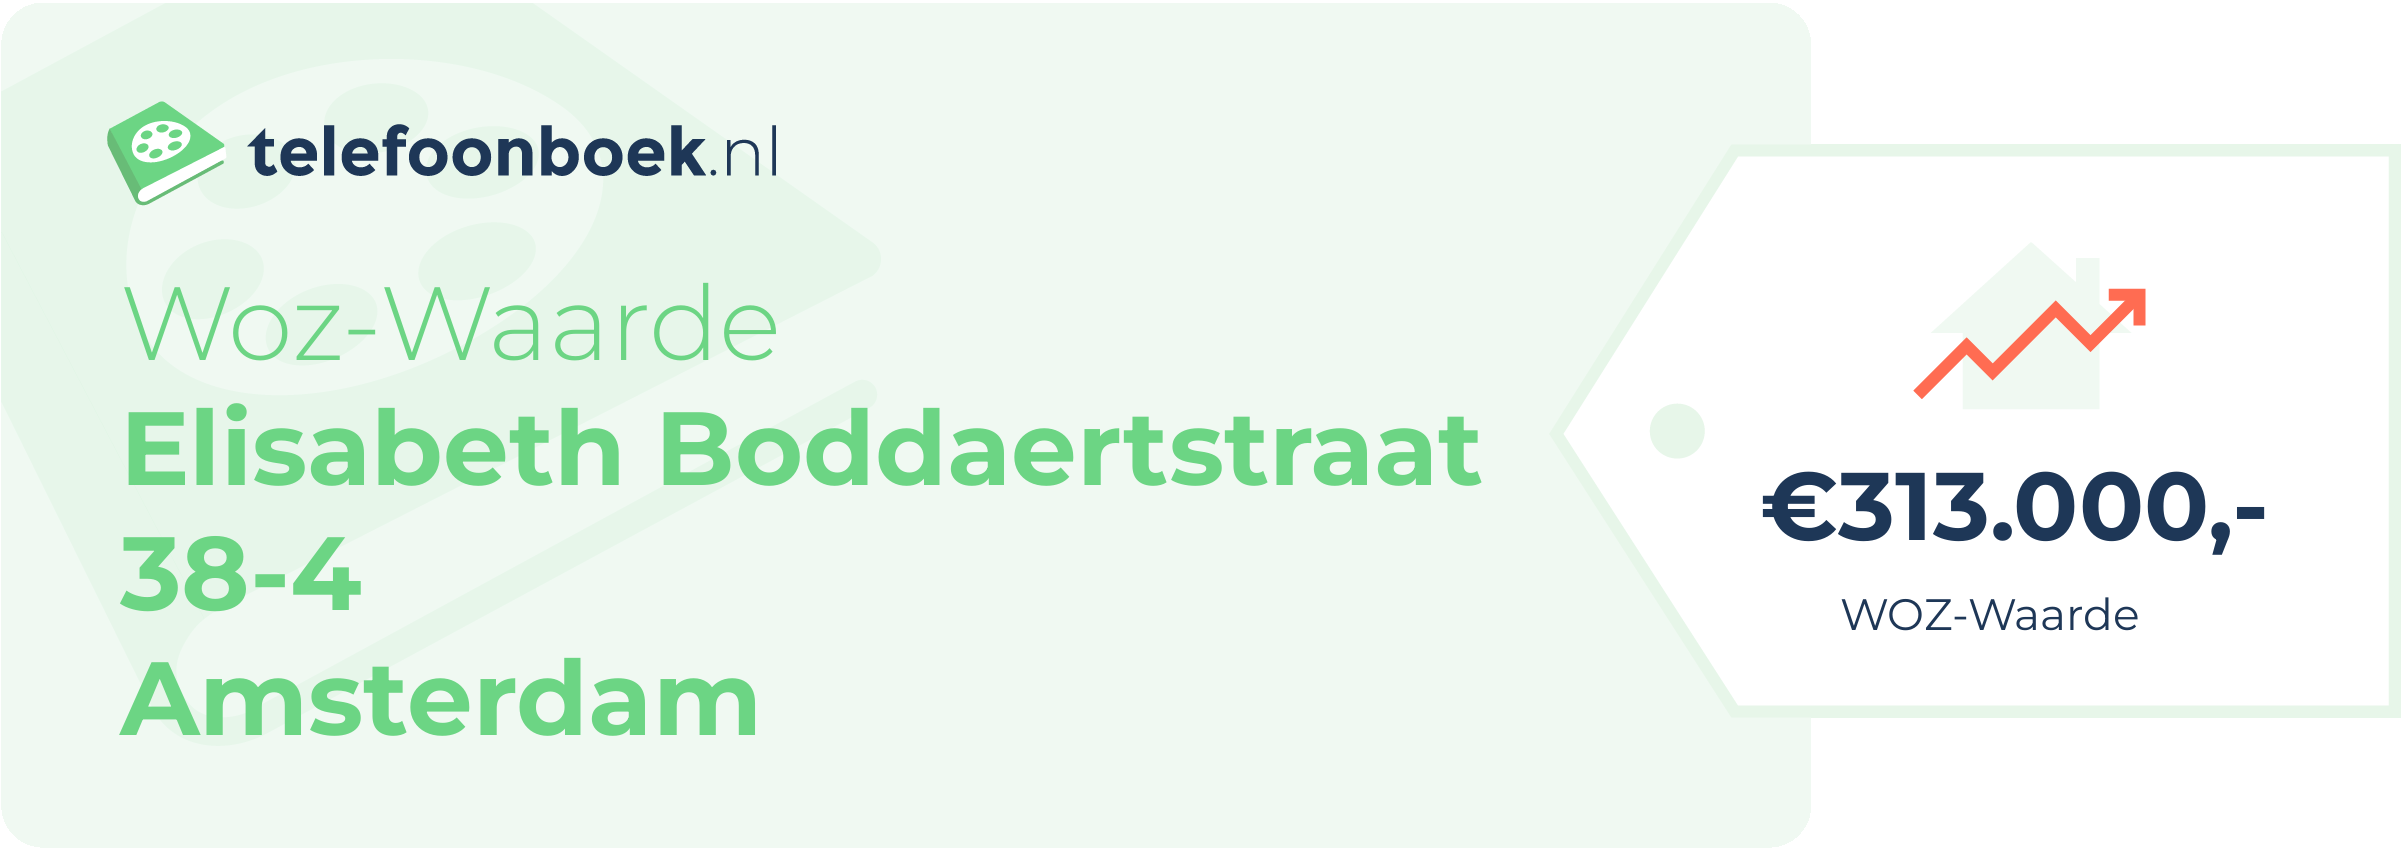 WOZ-waarde Elisabeth Boddaertstraat 38-4 Amsterdam